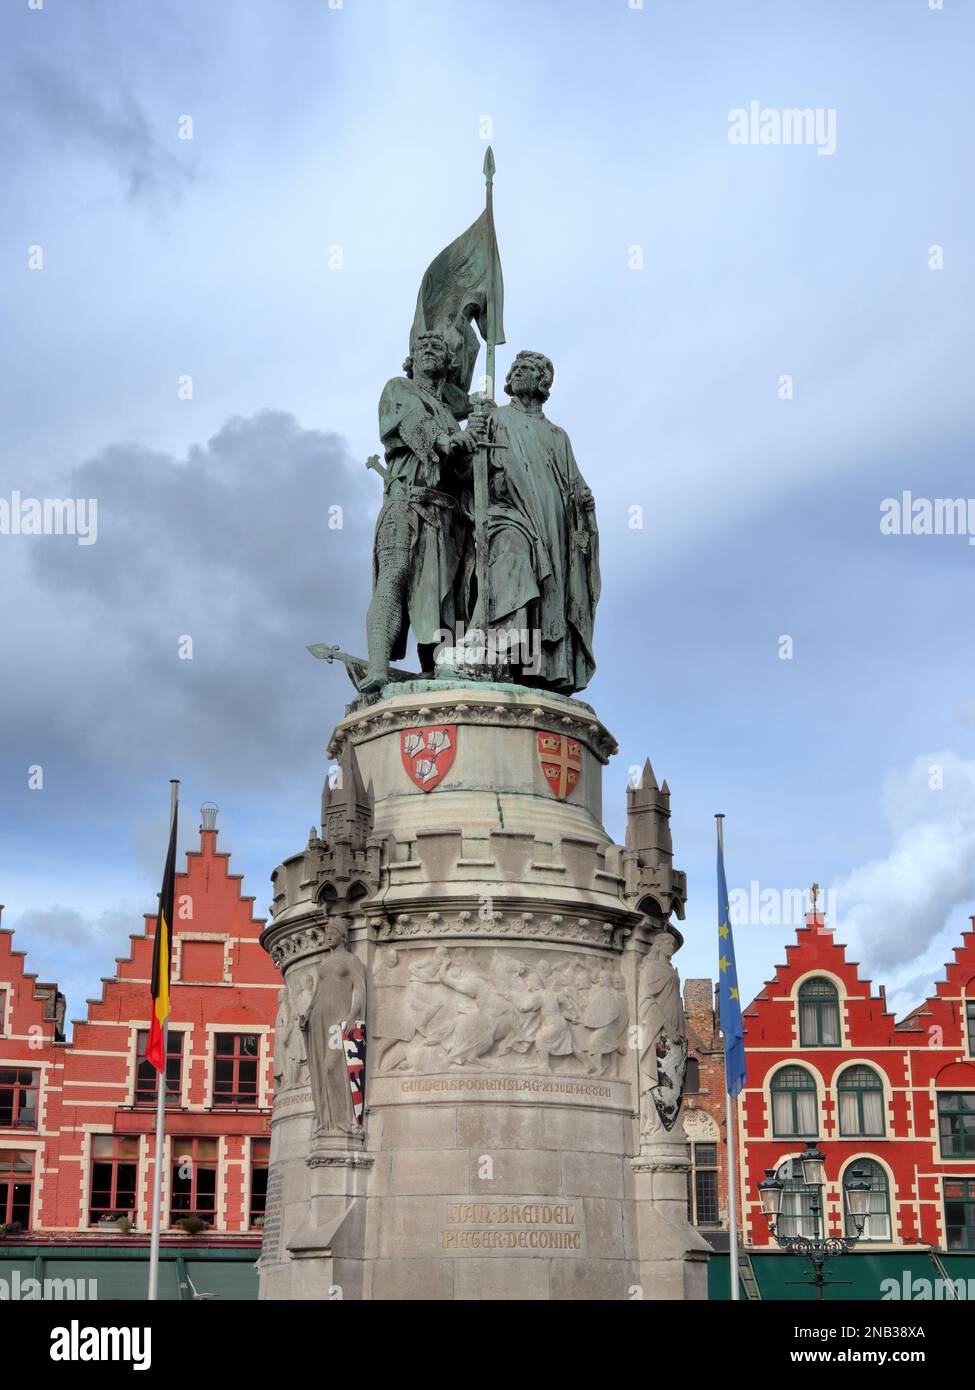 Statue of Jan Breydel and Pieter De Coninck in the Market Square of Bruges, Belgium Stock Photo